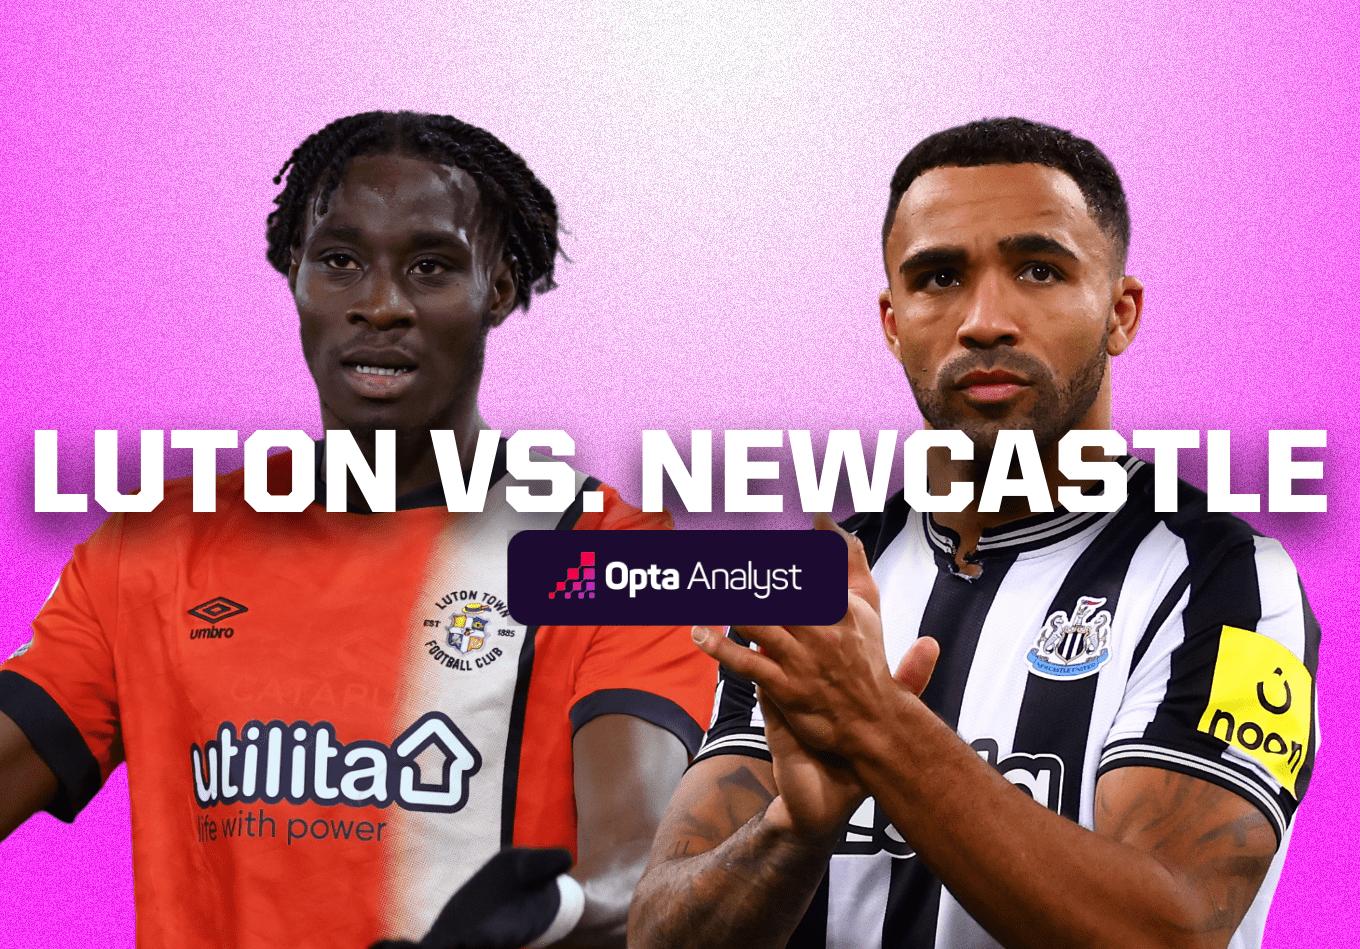 Luton vs Newcastle: Prediction and Preview